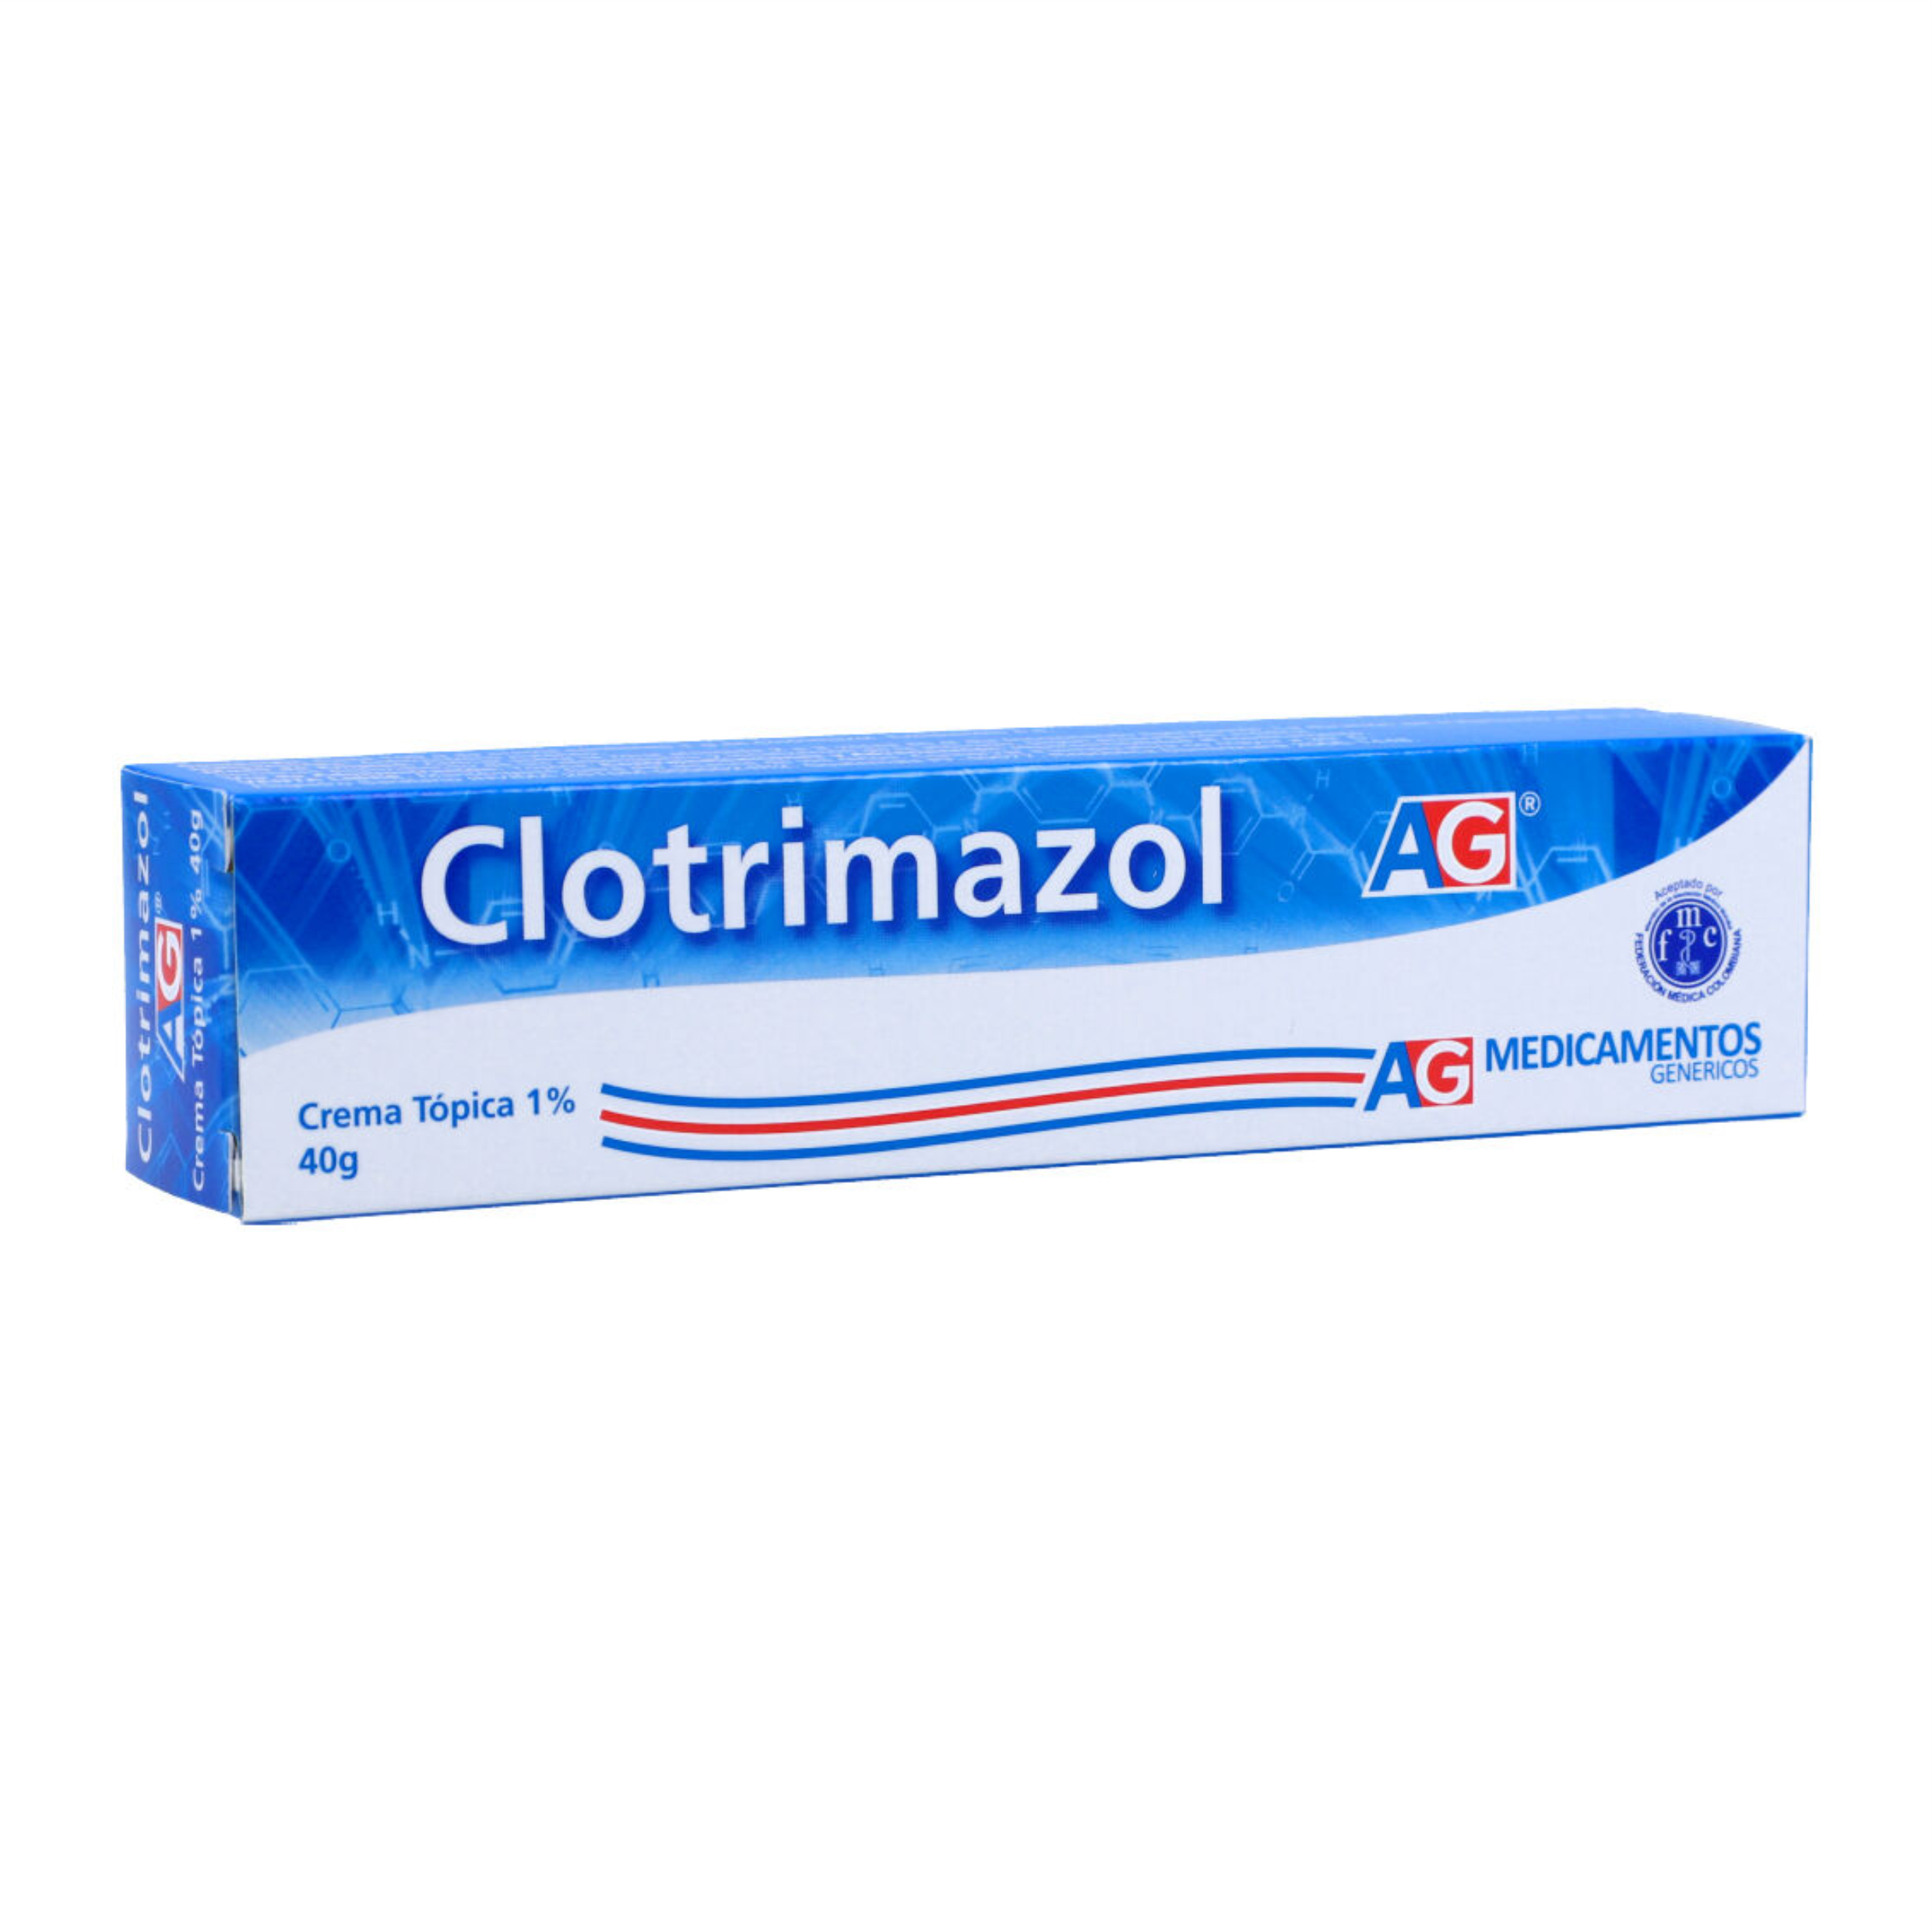 Clotrimazol 1% crema Tópica 40g